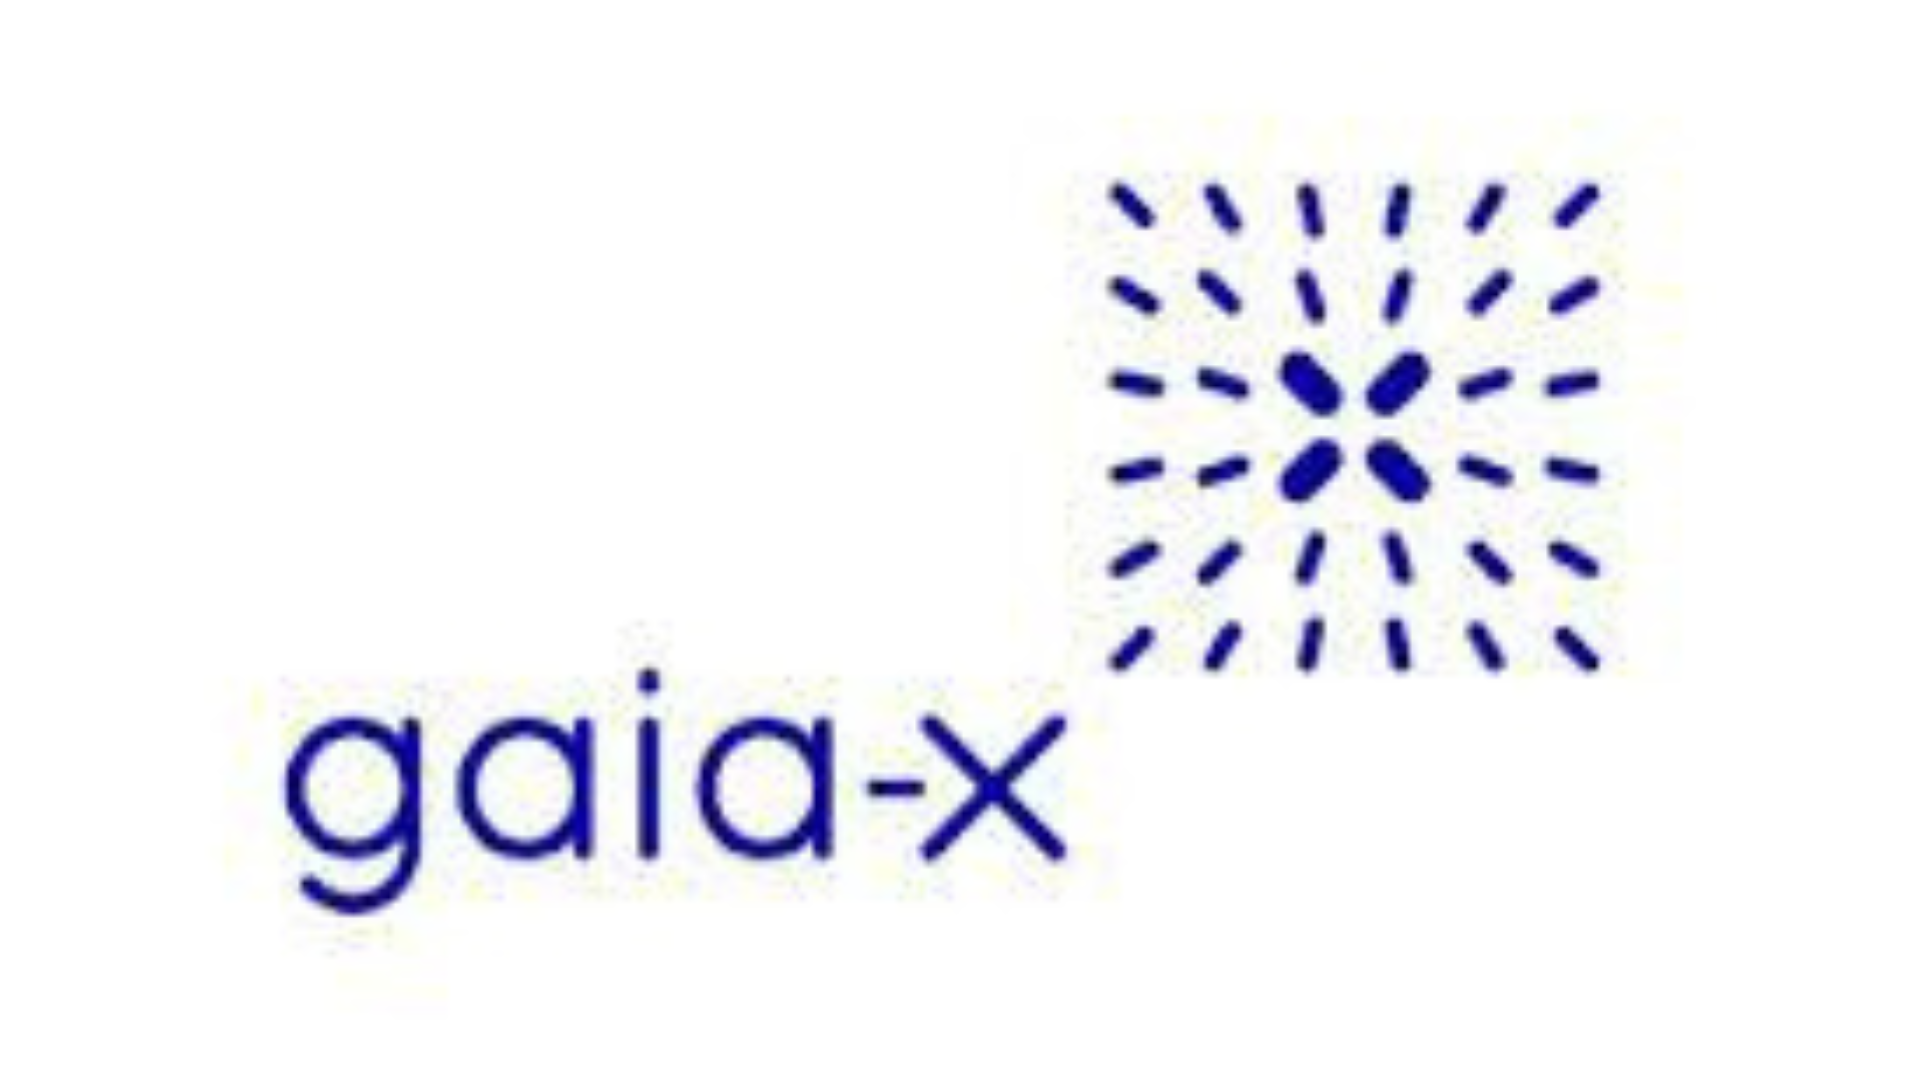 GAIA-X Logo